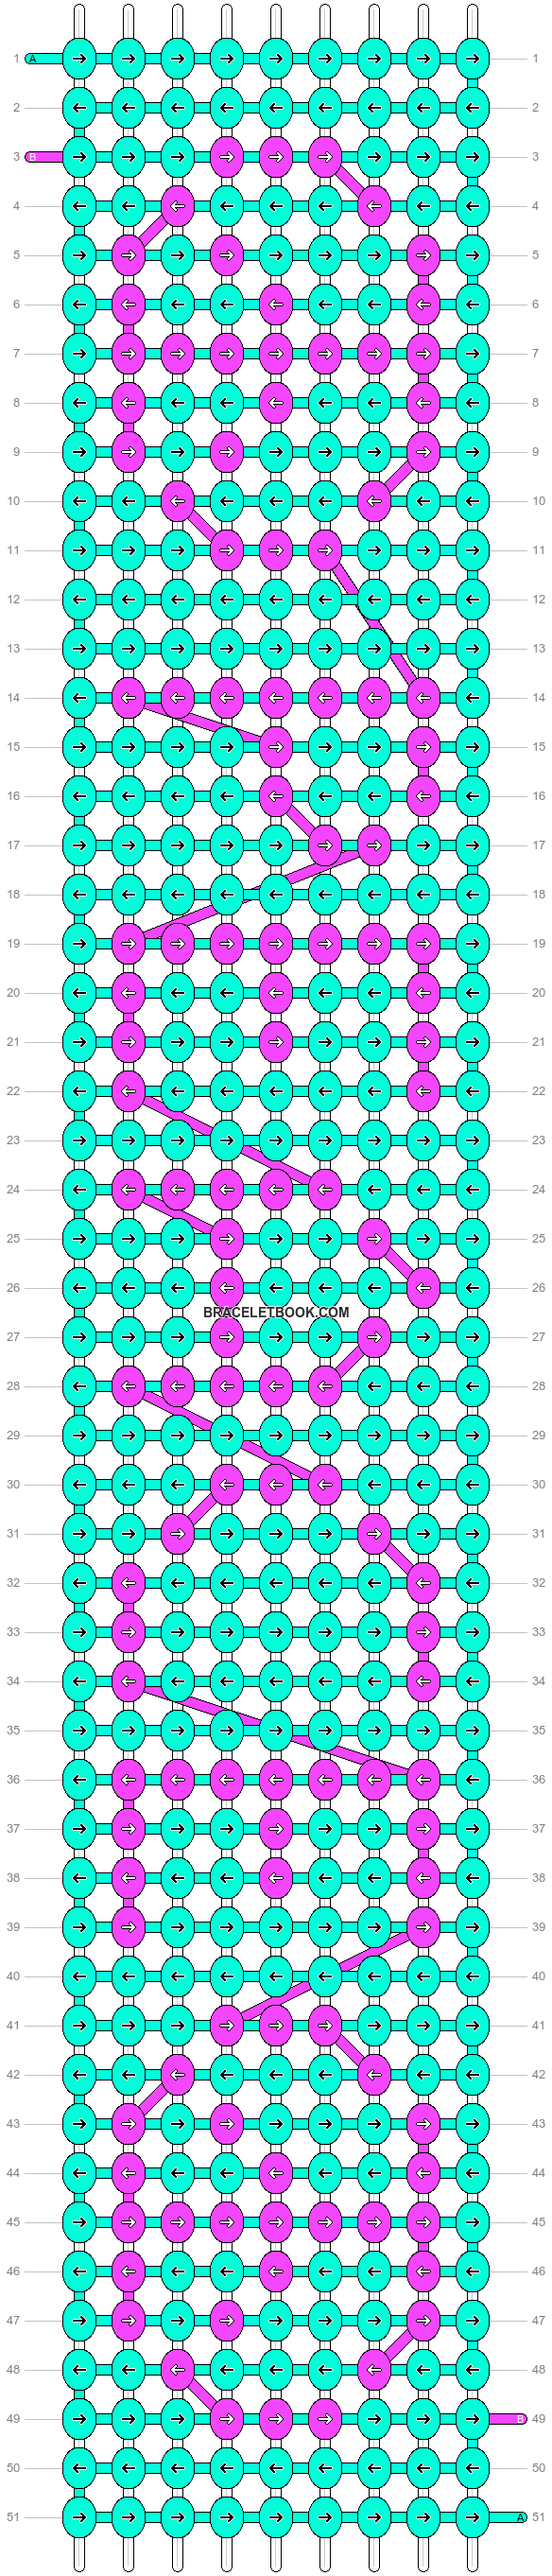 Alpha pattern #2475 variation #63840 pattern